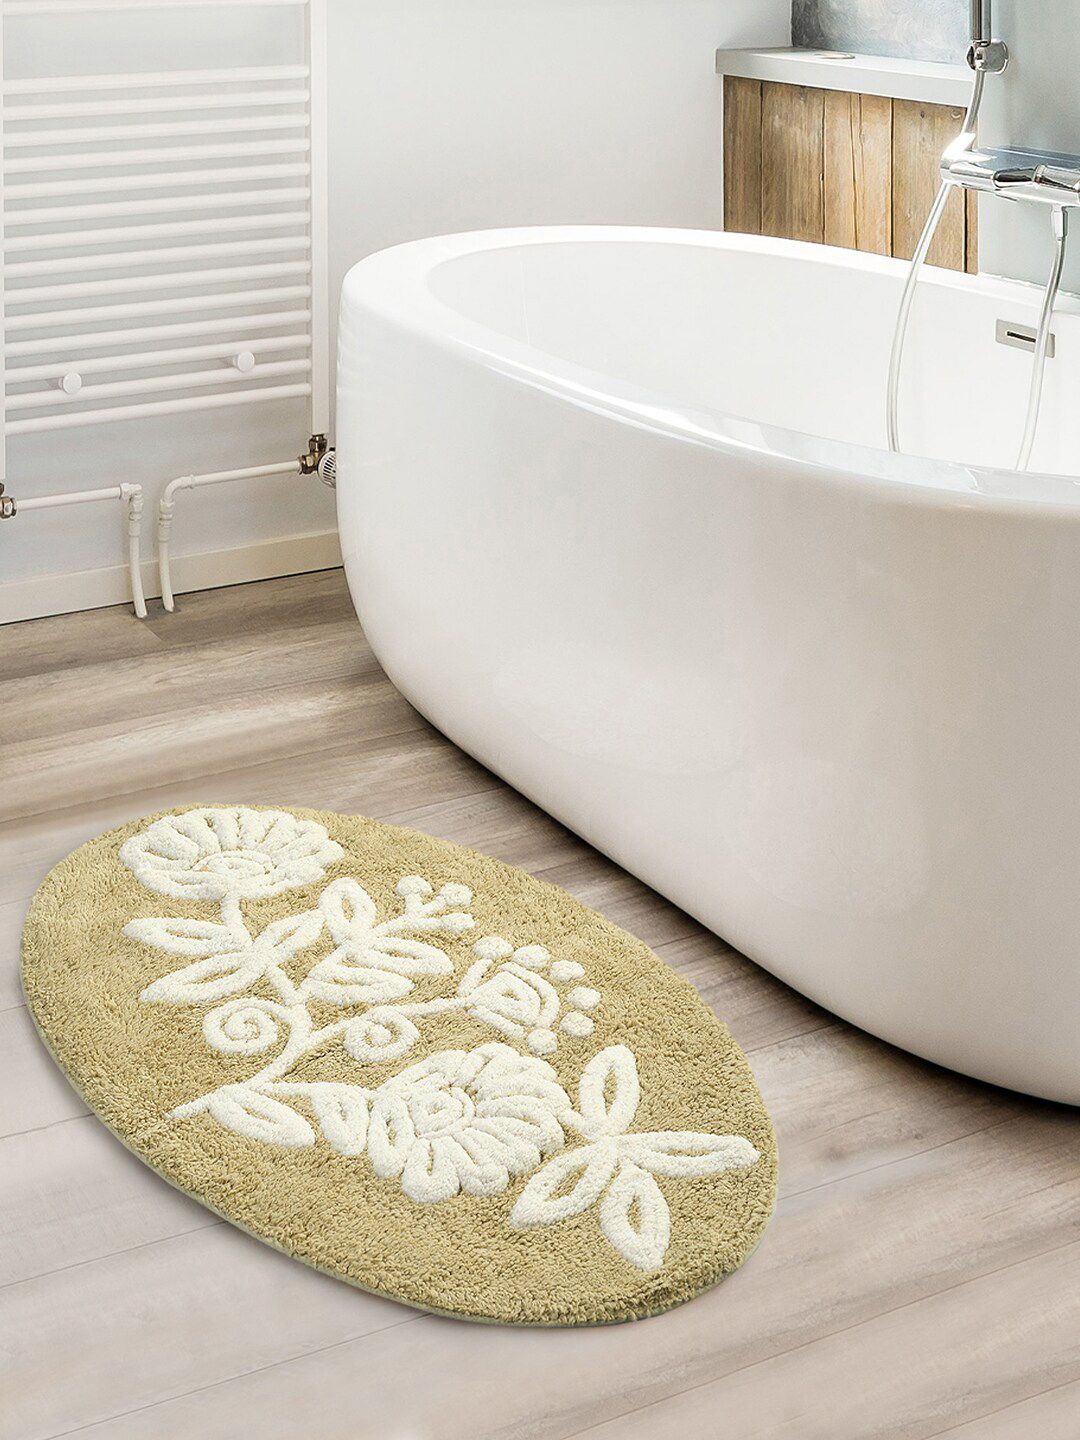 Saral Home Beige & White Handmade Oval-Shaped Bathmat Price in India